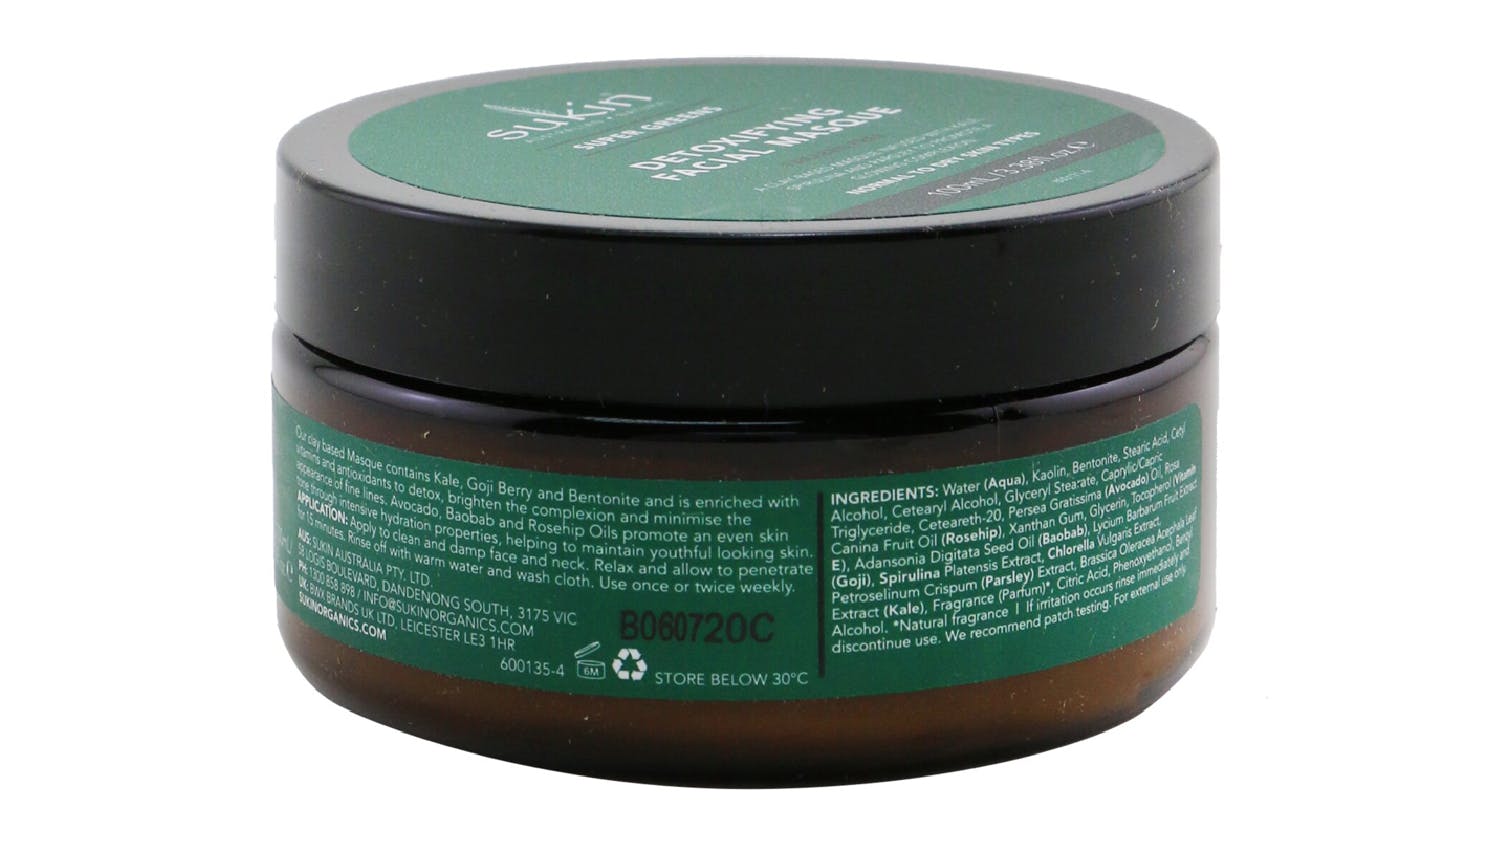 Sukin Super Greens Detoxifying Facial Masque (Normal To Dry Skin Types) - 100ml/3.38oz